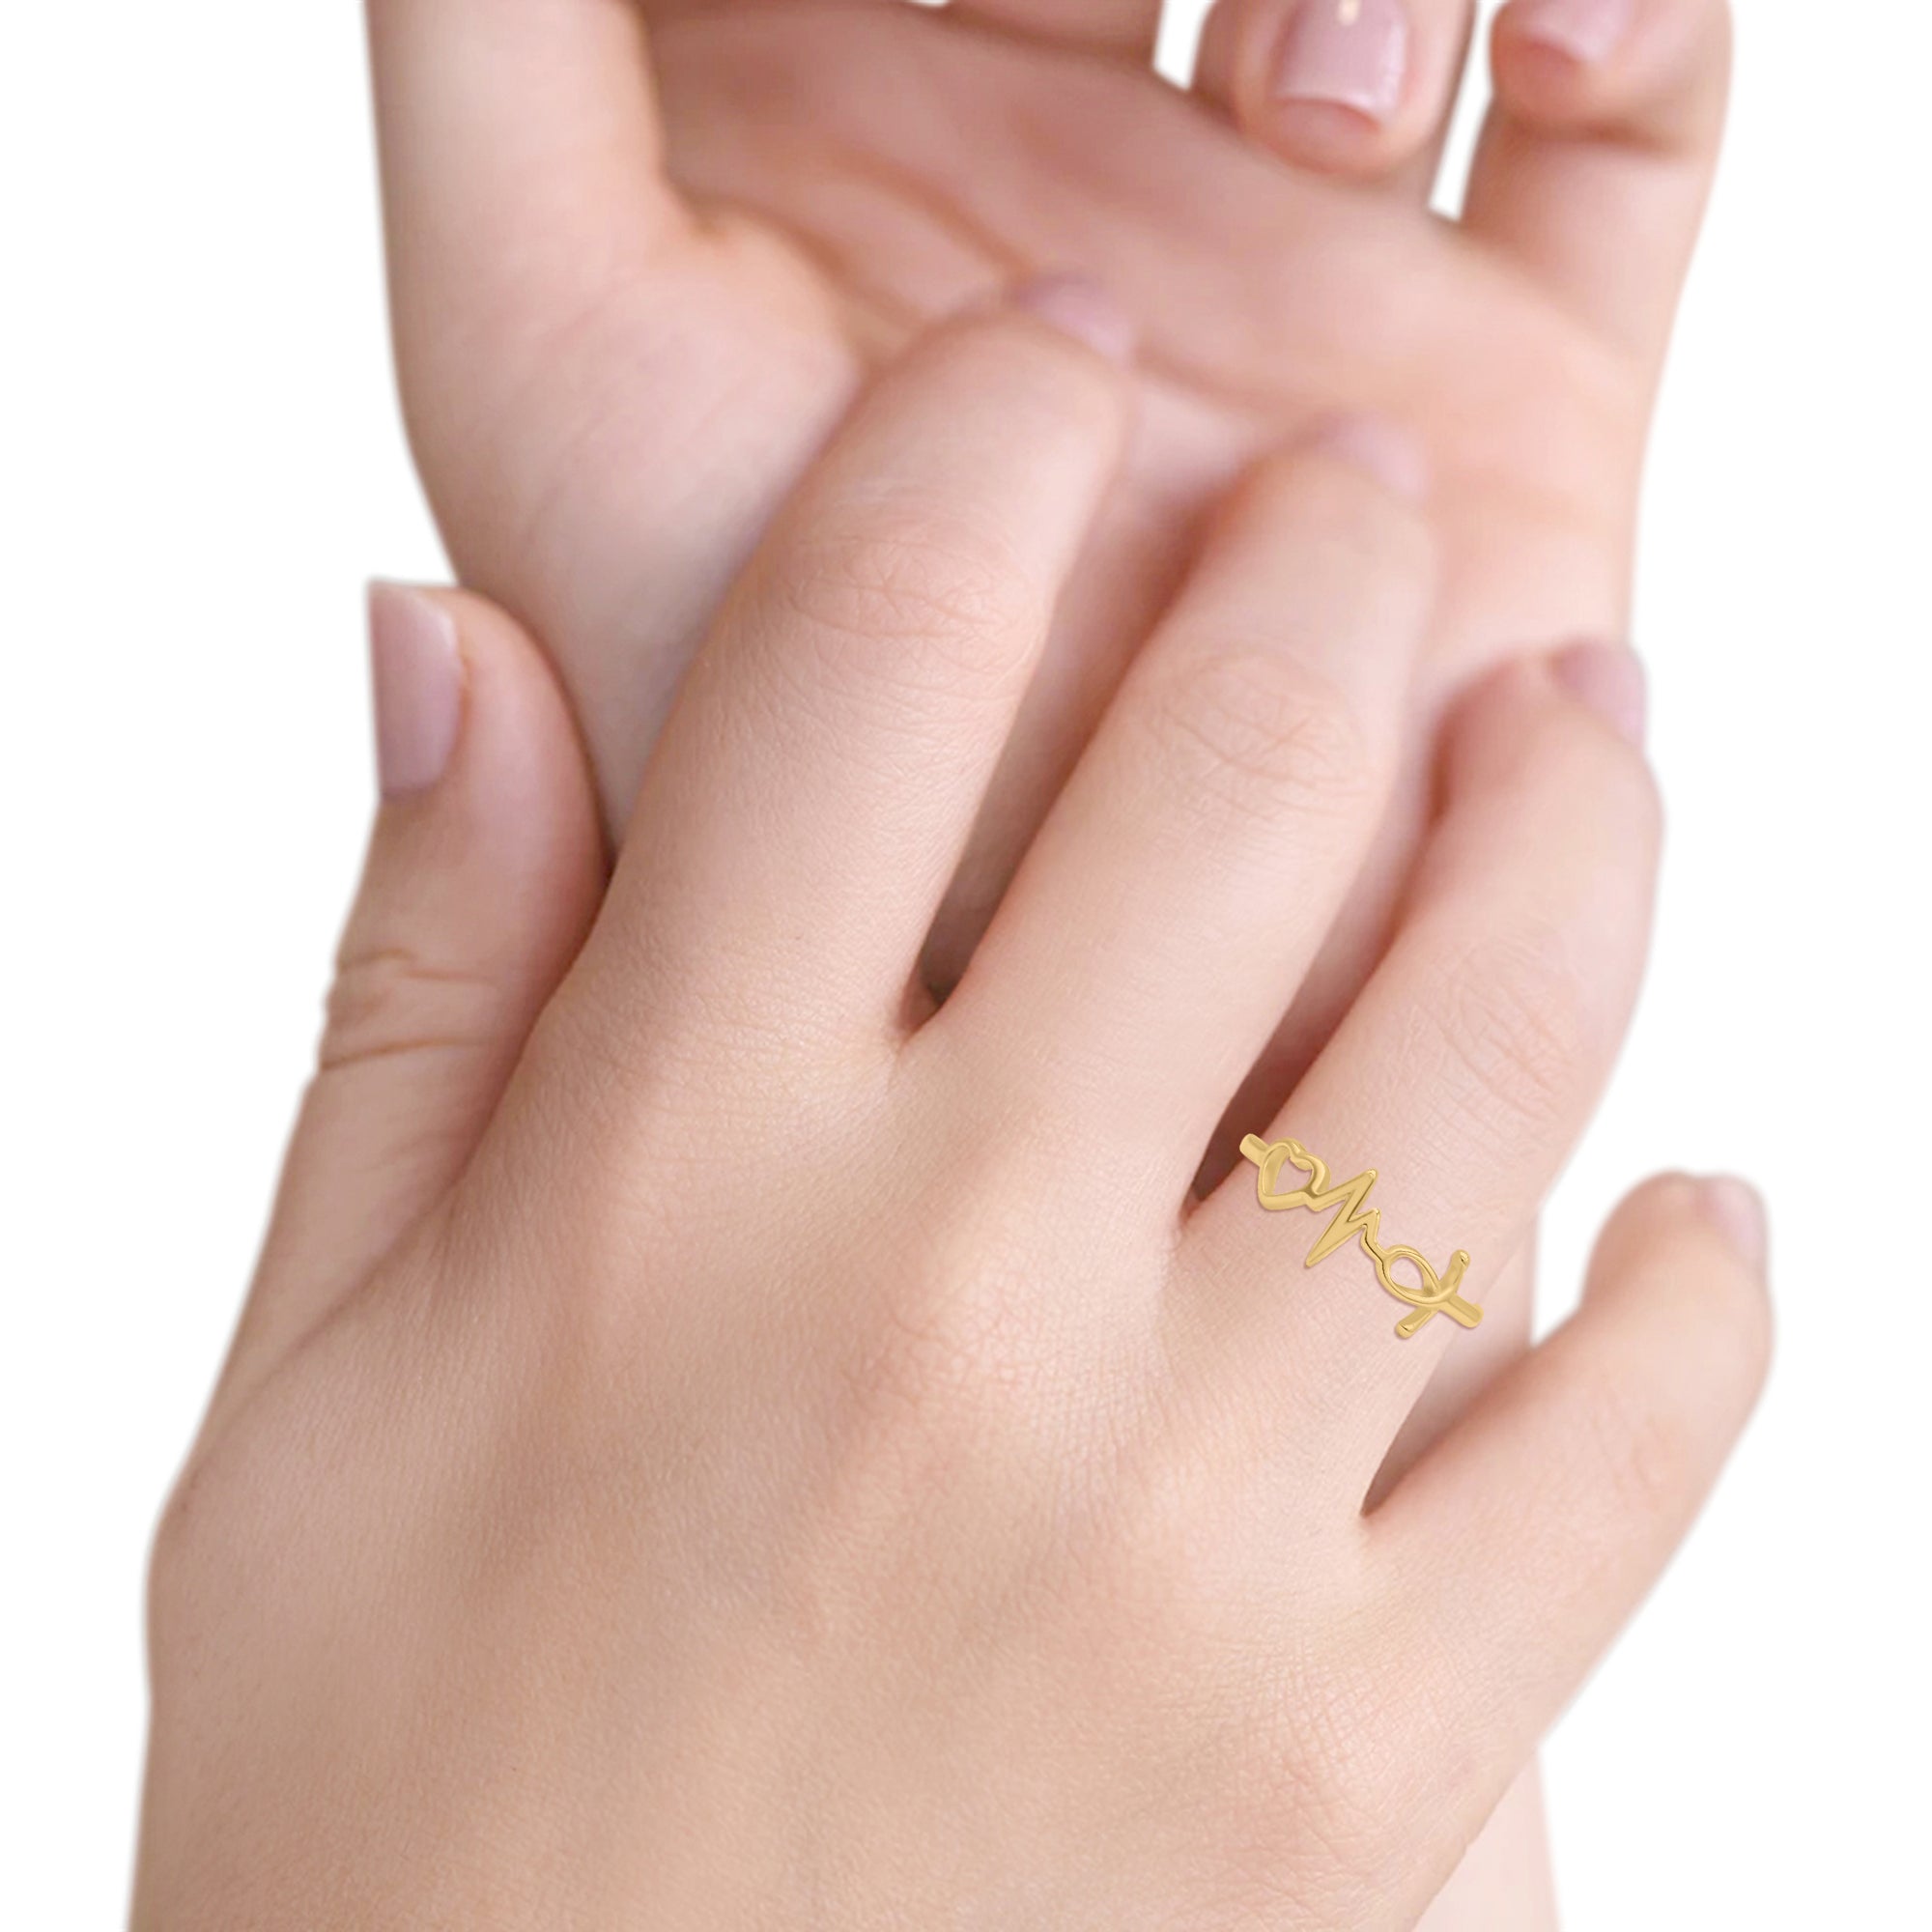 Gold Ring Designed Swastik Stock Photo 1544411867 | Shutterstock